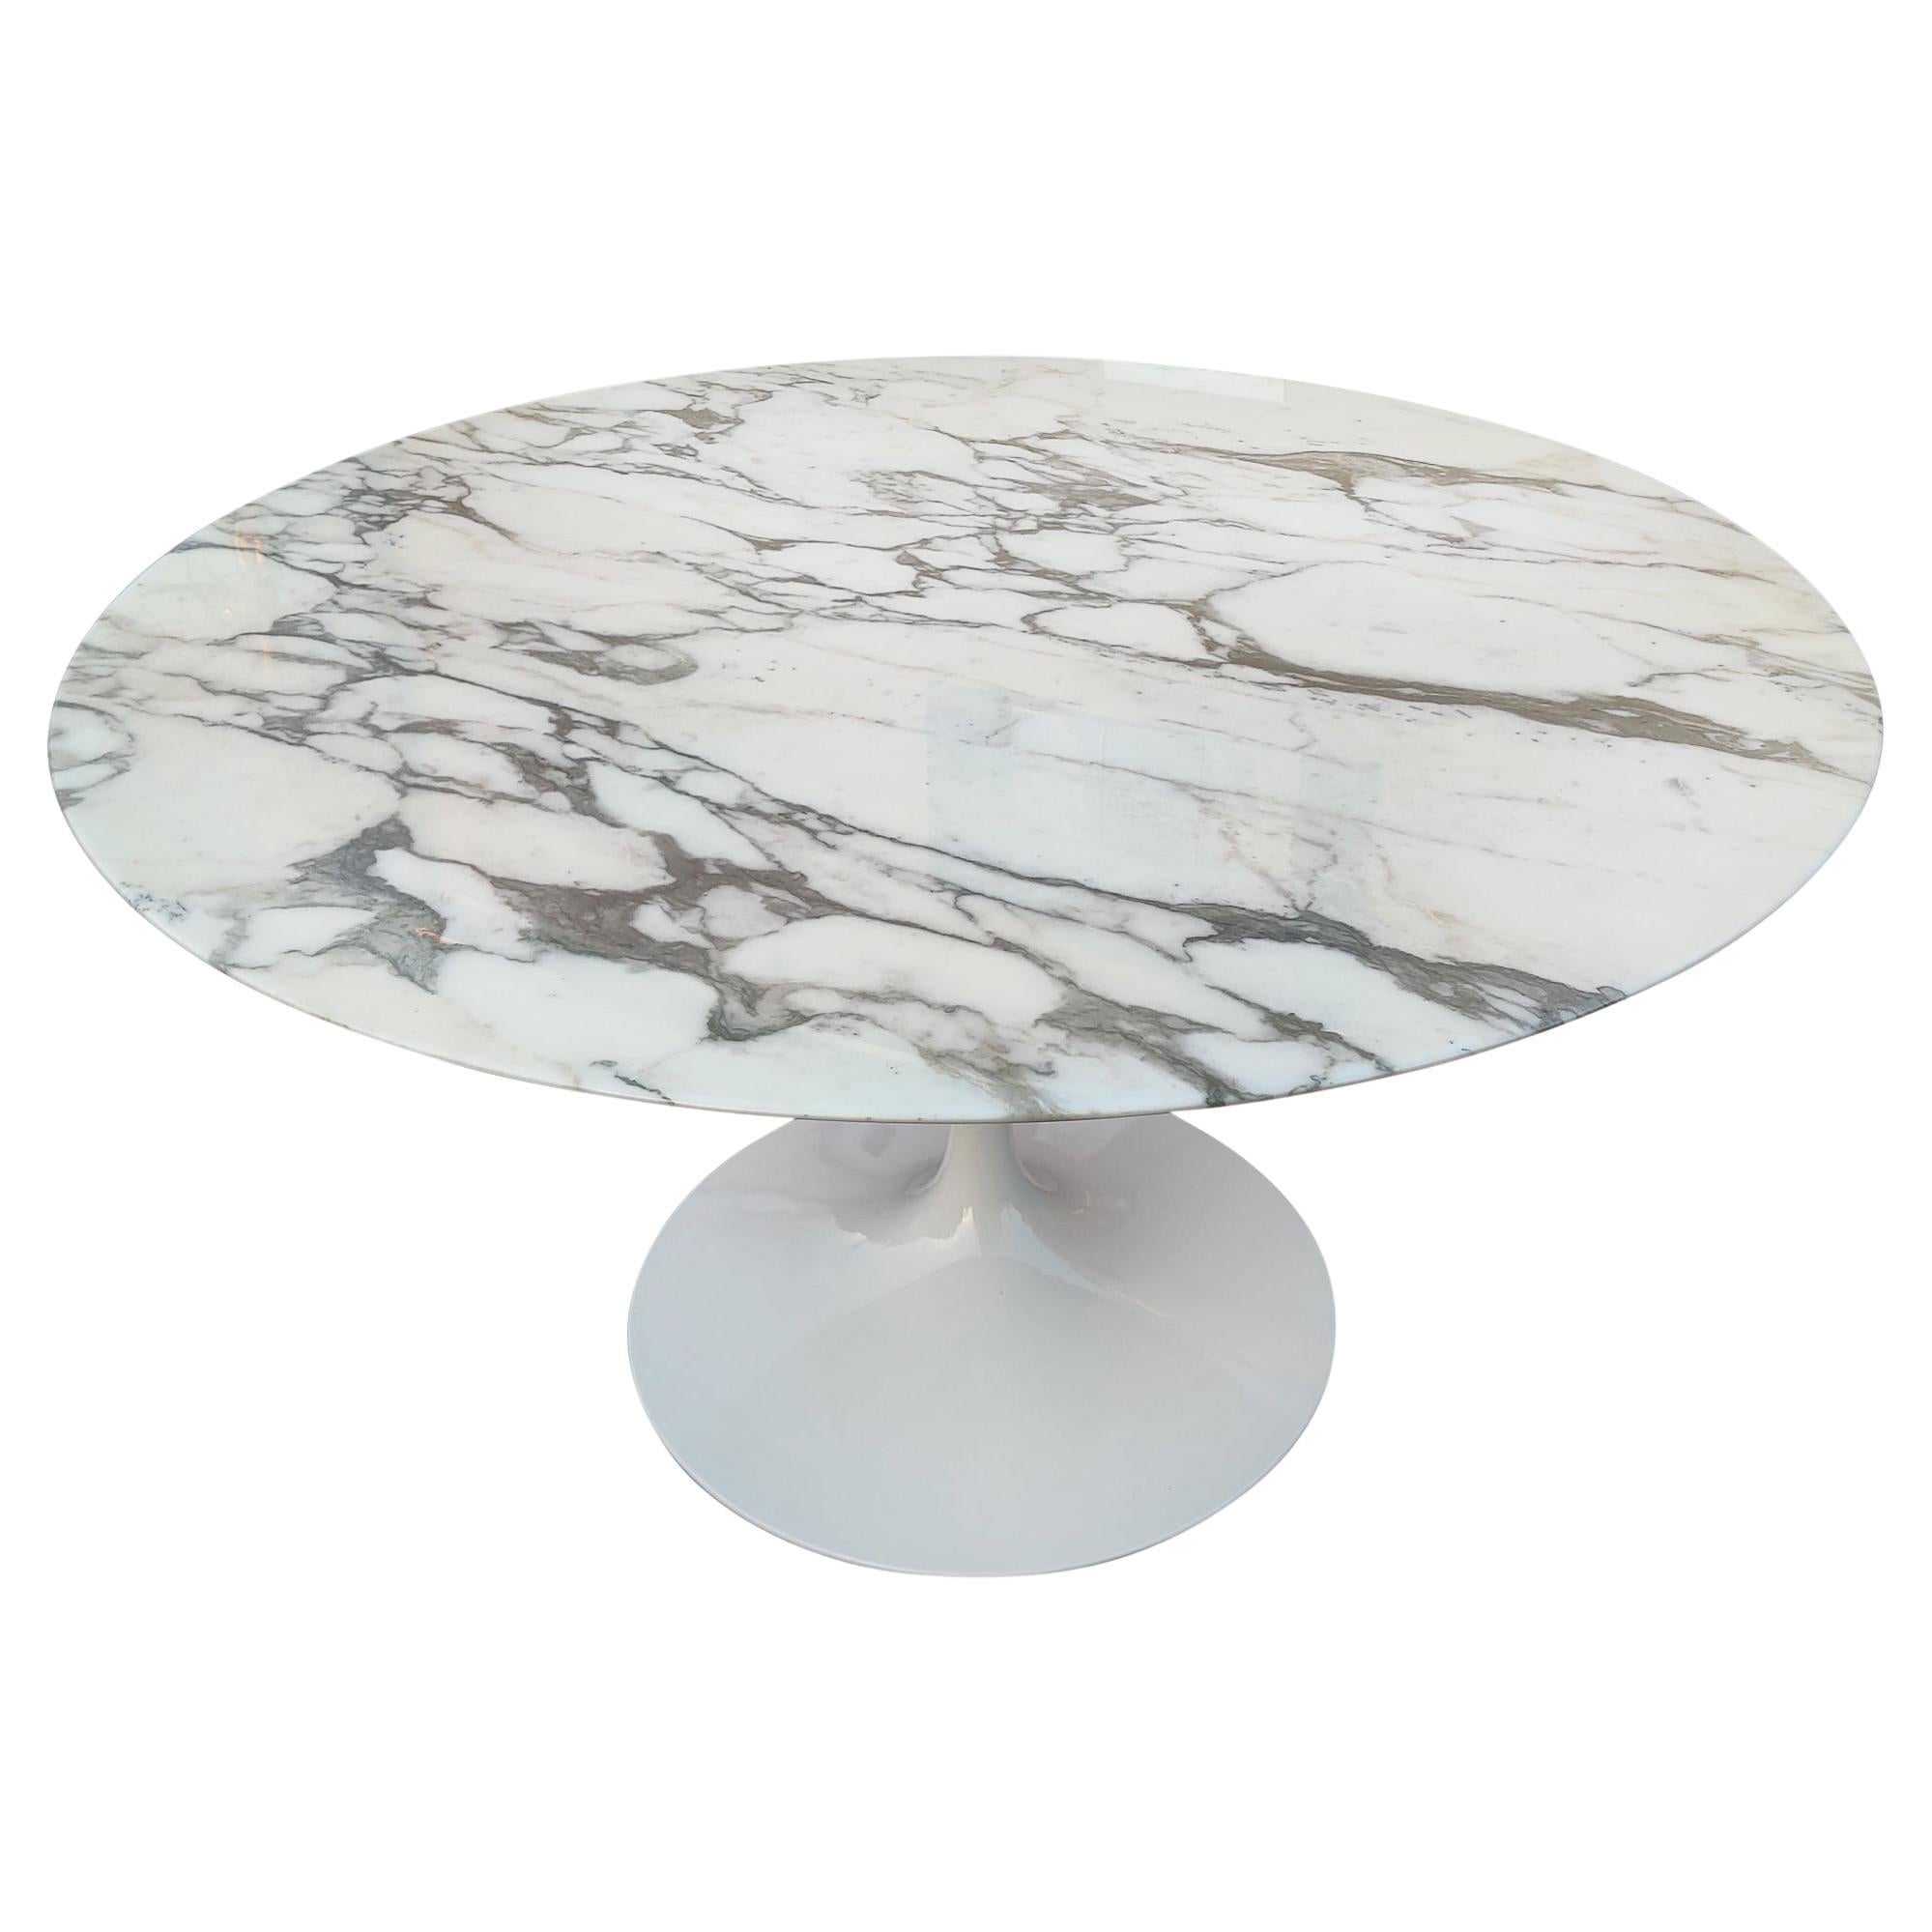 Eero Saarinen Knoll Tulip Round Dining Table 54"" DIA Arabescato Marble Glossy  en vente